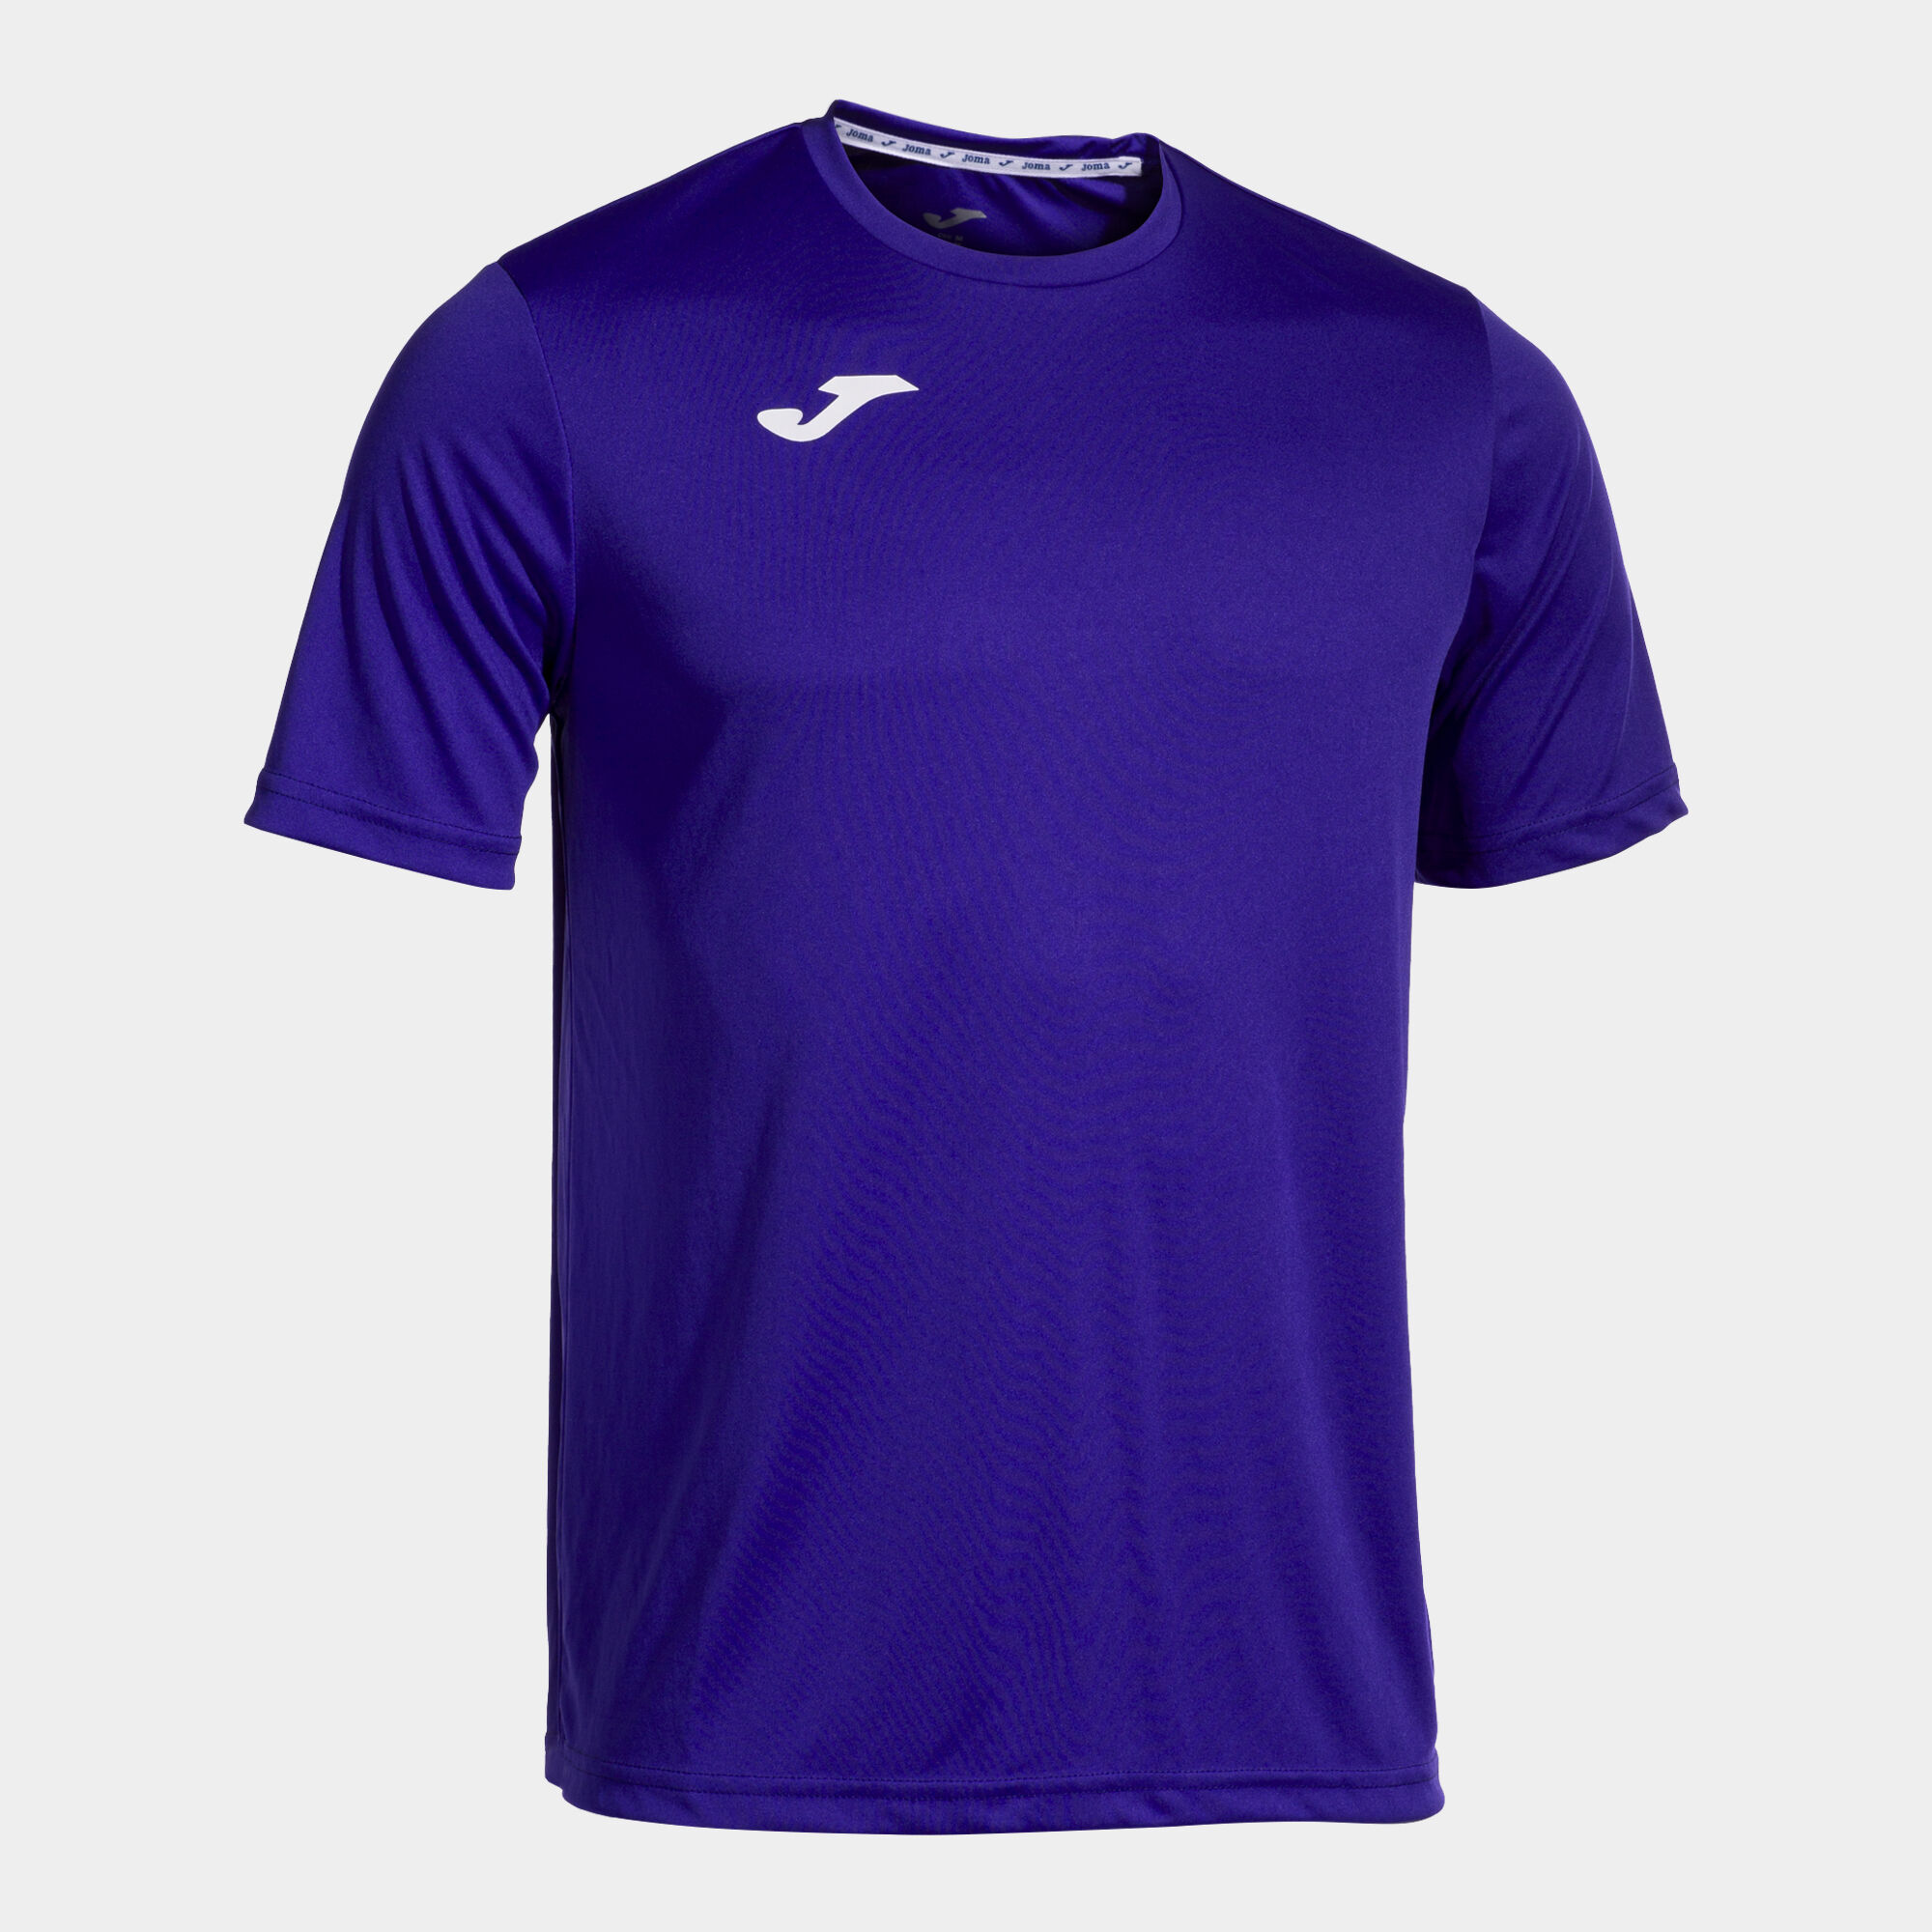 Shirt short sleeve man Combi purple